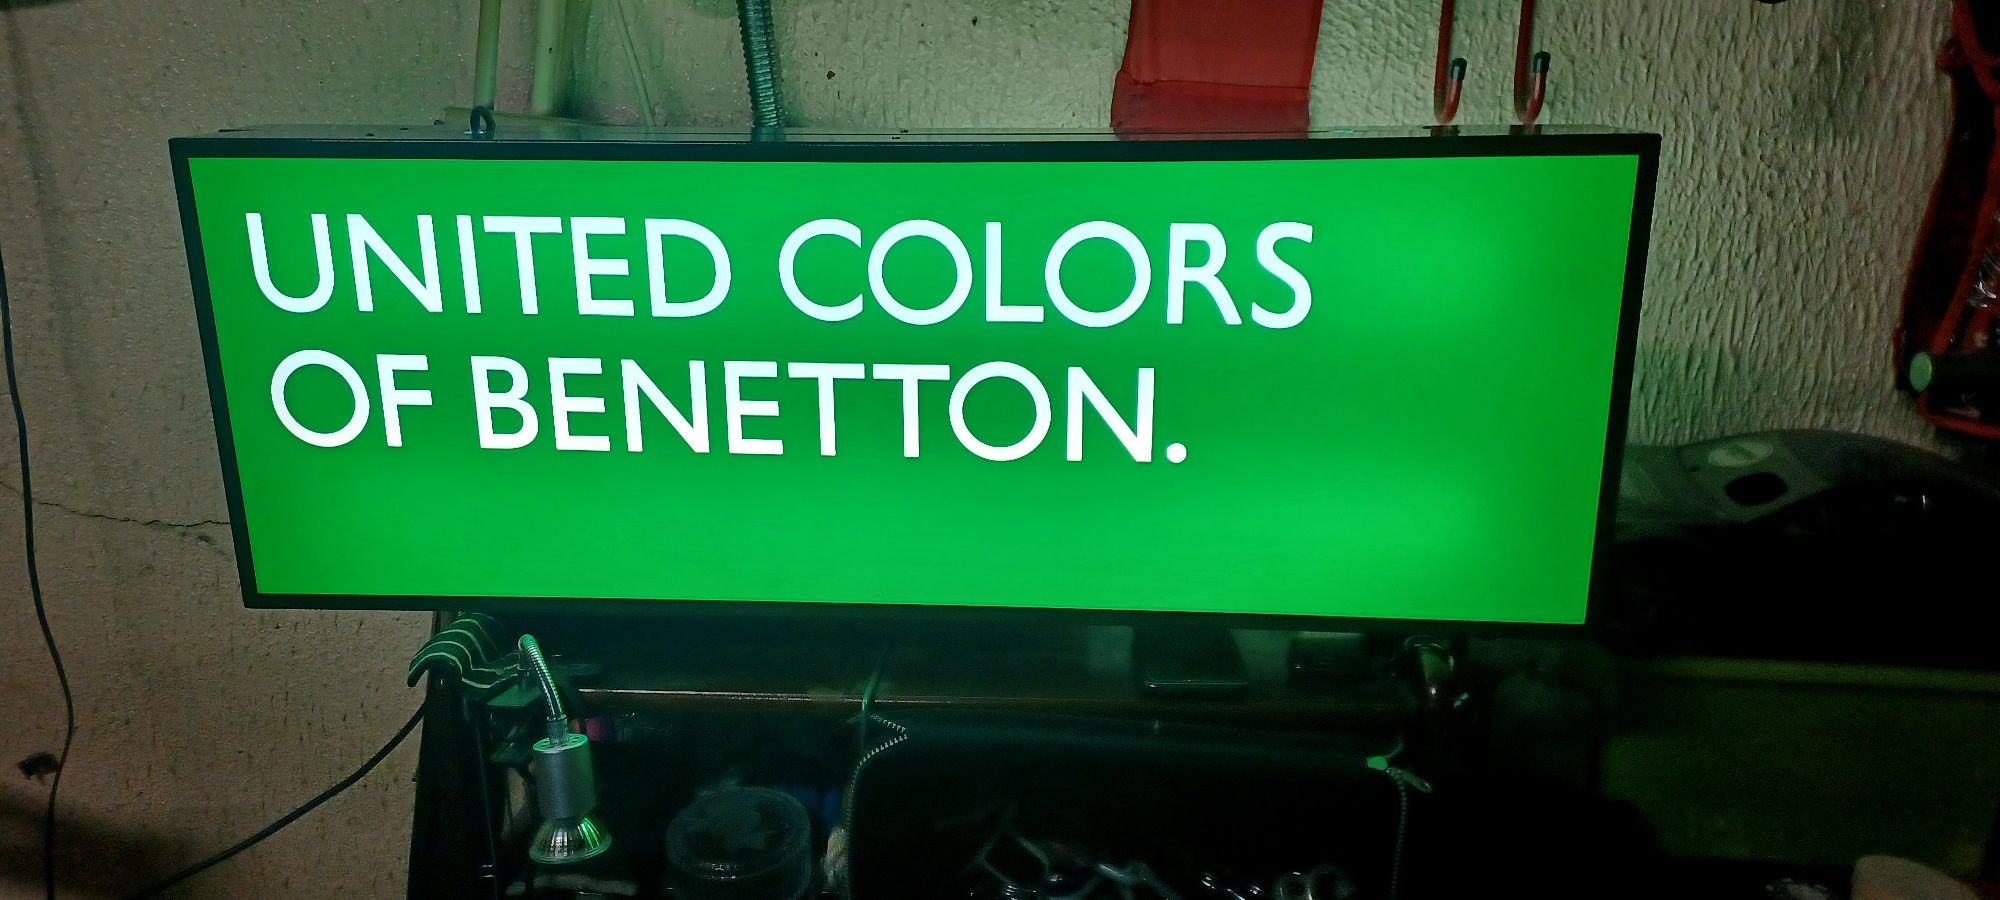 Reclame luminoso United Colors of BENETTON.